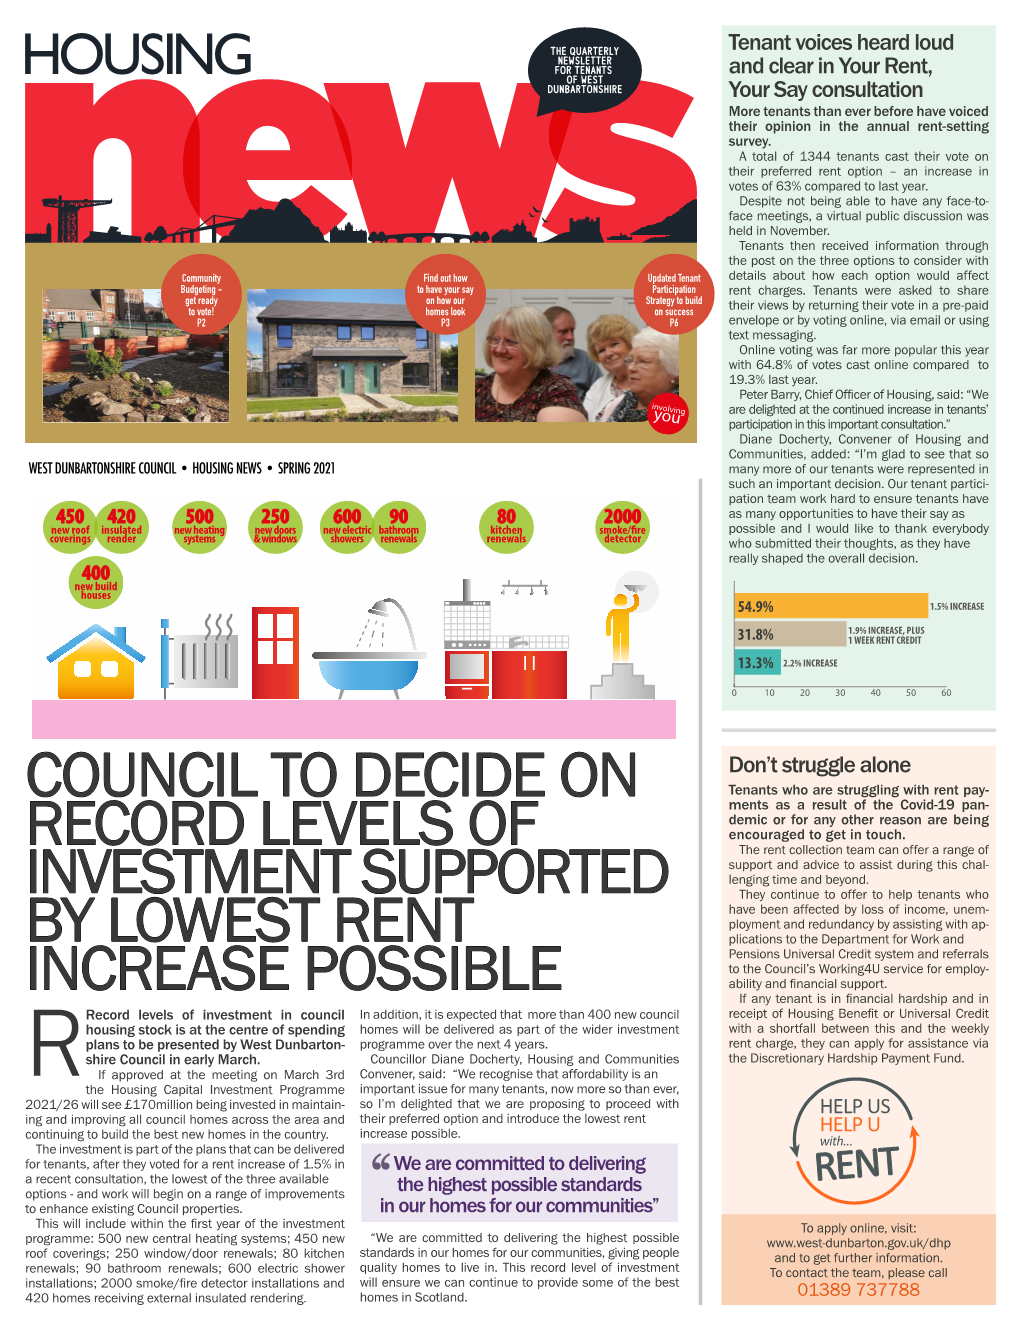 West Dunbartonshire Council Housing News Spring 2021